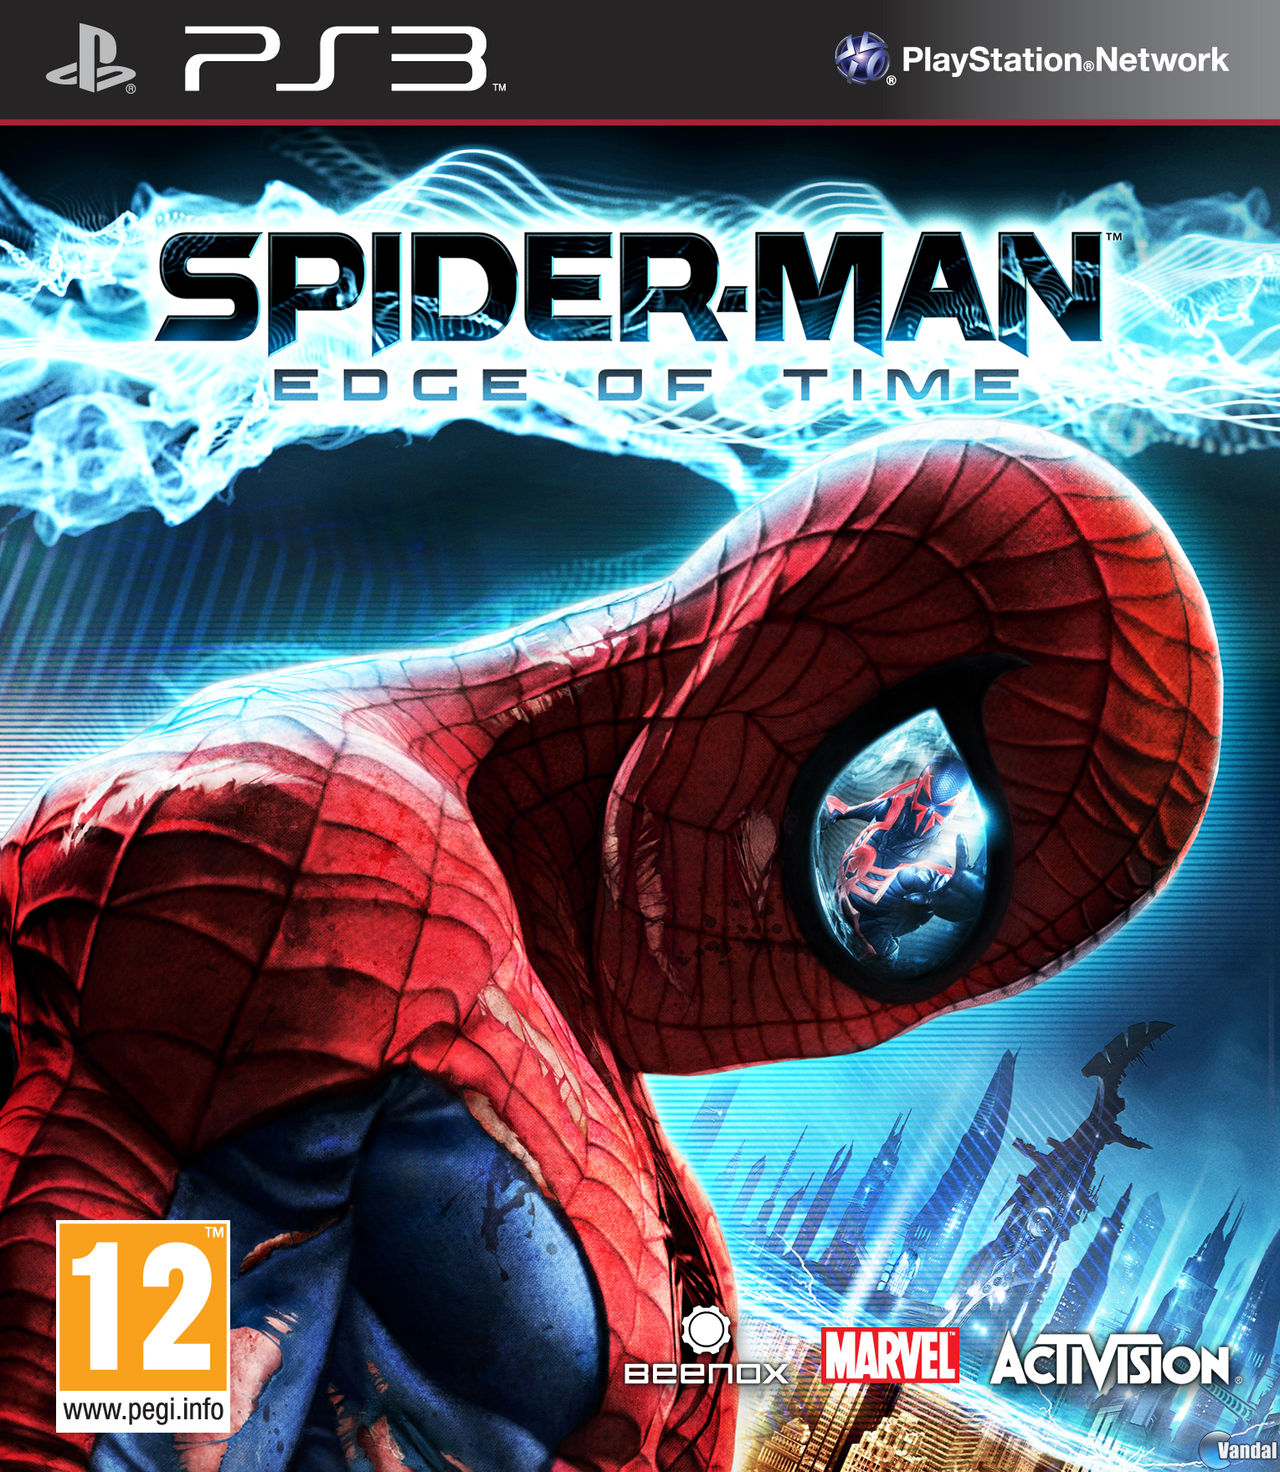 Fahrenheit vecino flaco Spider-Man: Edge of Time - Videojuego (PS3, Xbox 360, Wii y Nintendo 3DS) -  Vandal